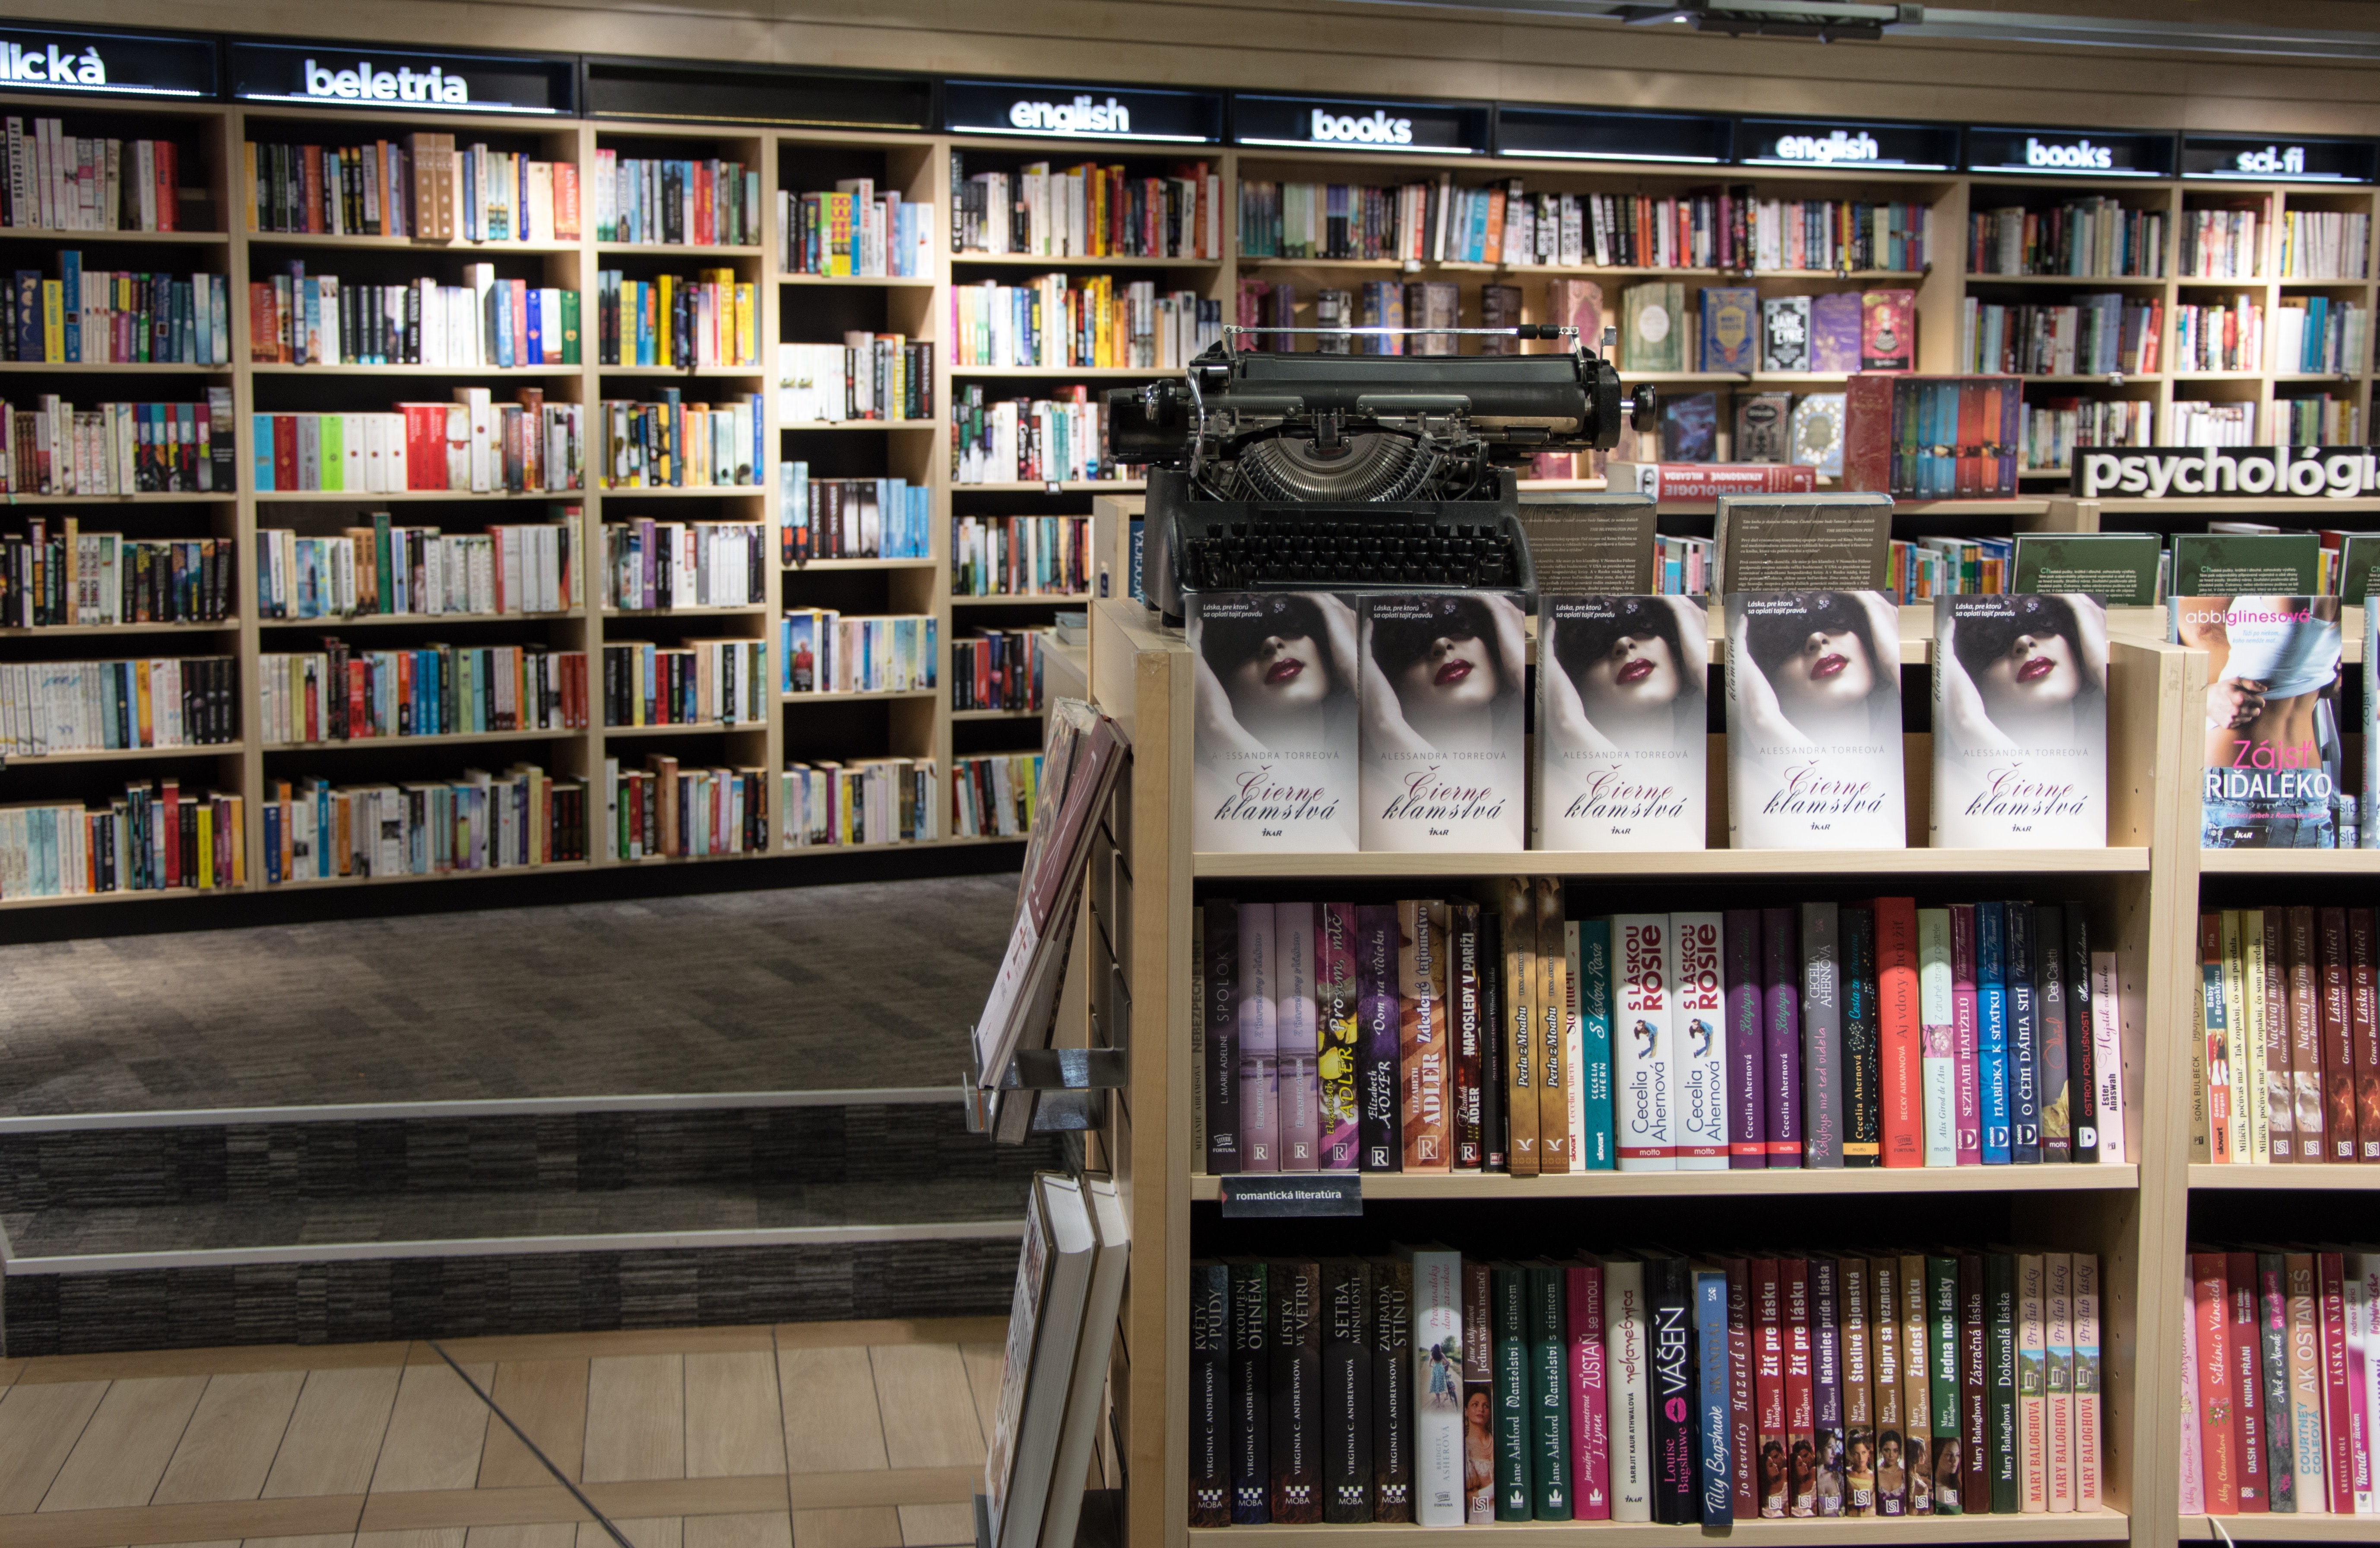 View of books in shelf photo